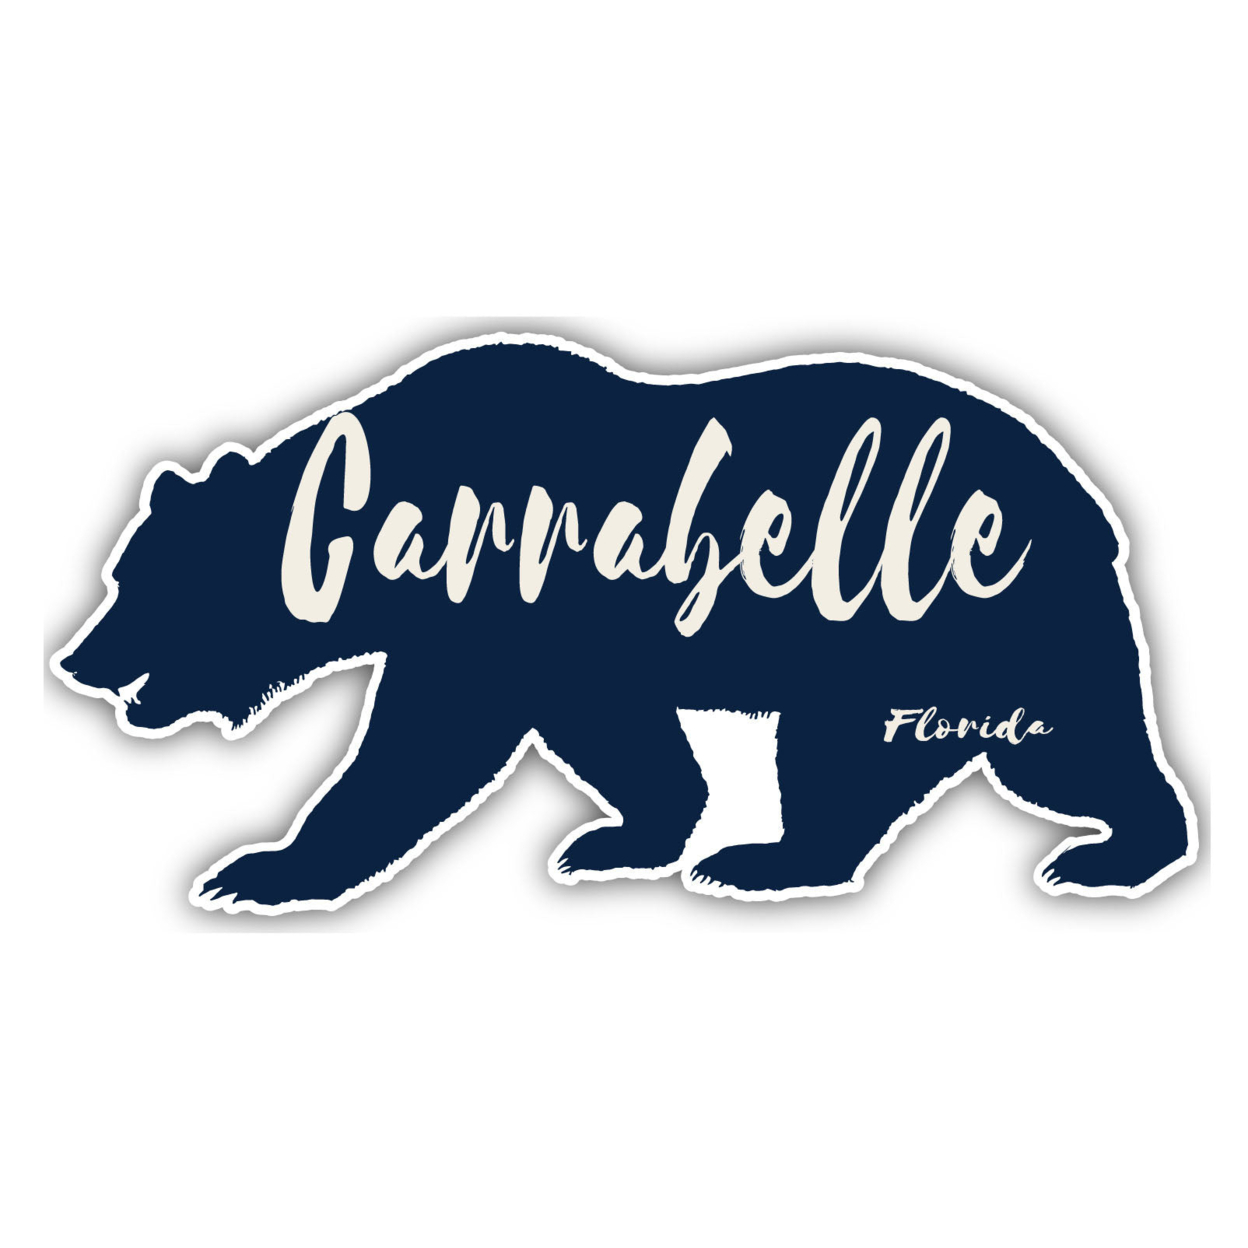 Carrabelle Florida Souvenir Decorative Stickers (Choose Theme And Size) - Single Unit, 8-Inch, Bear